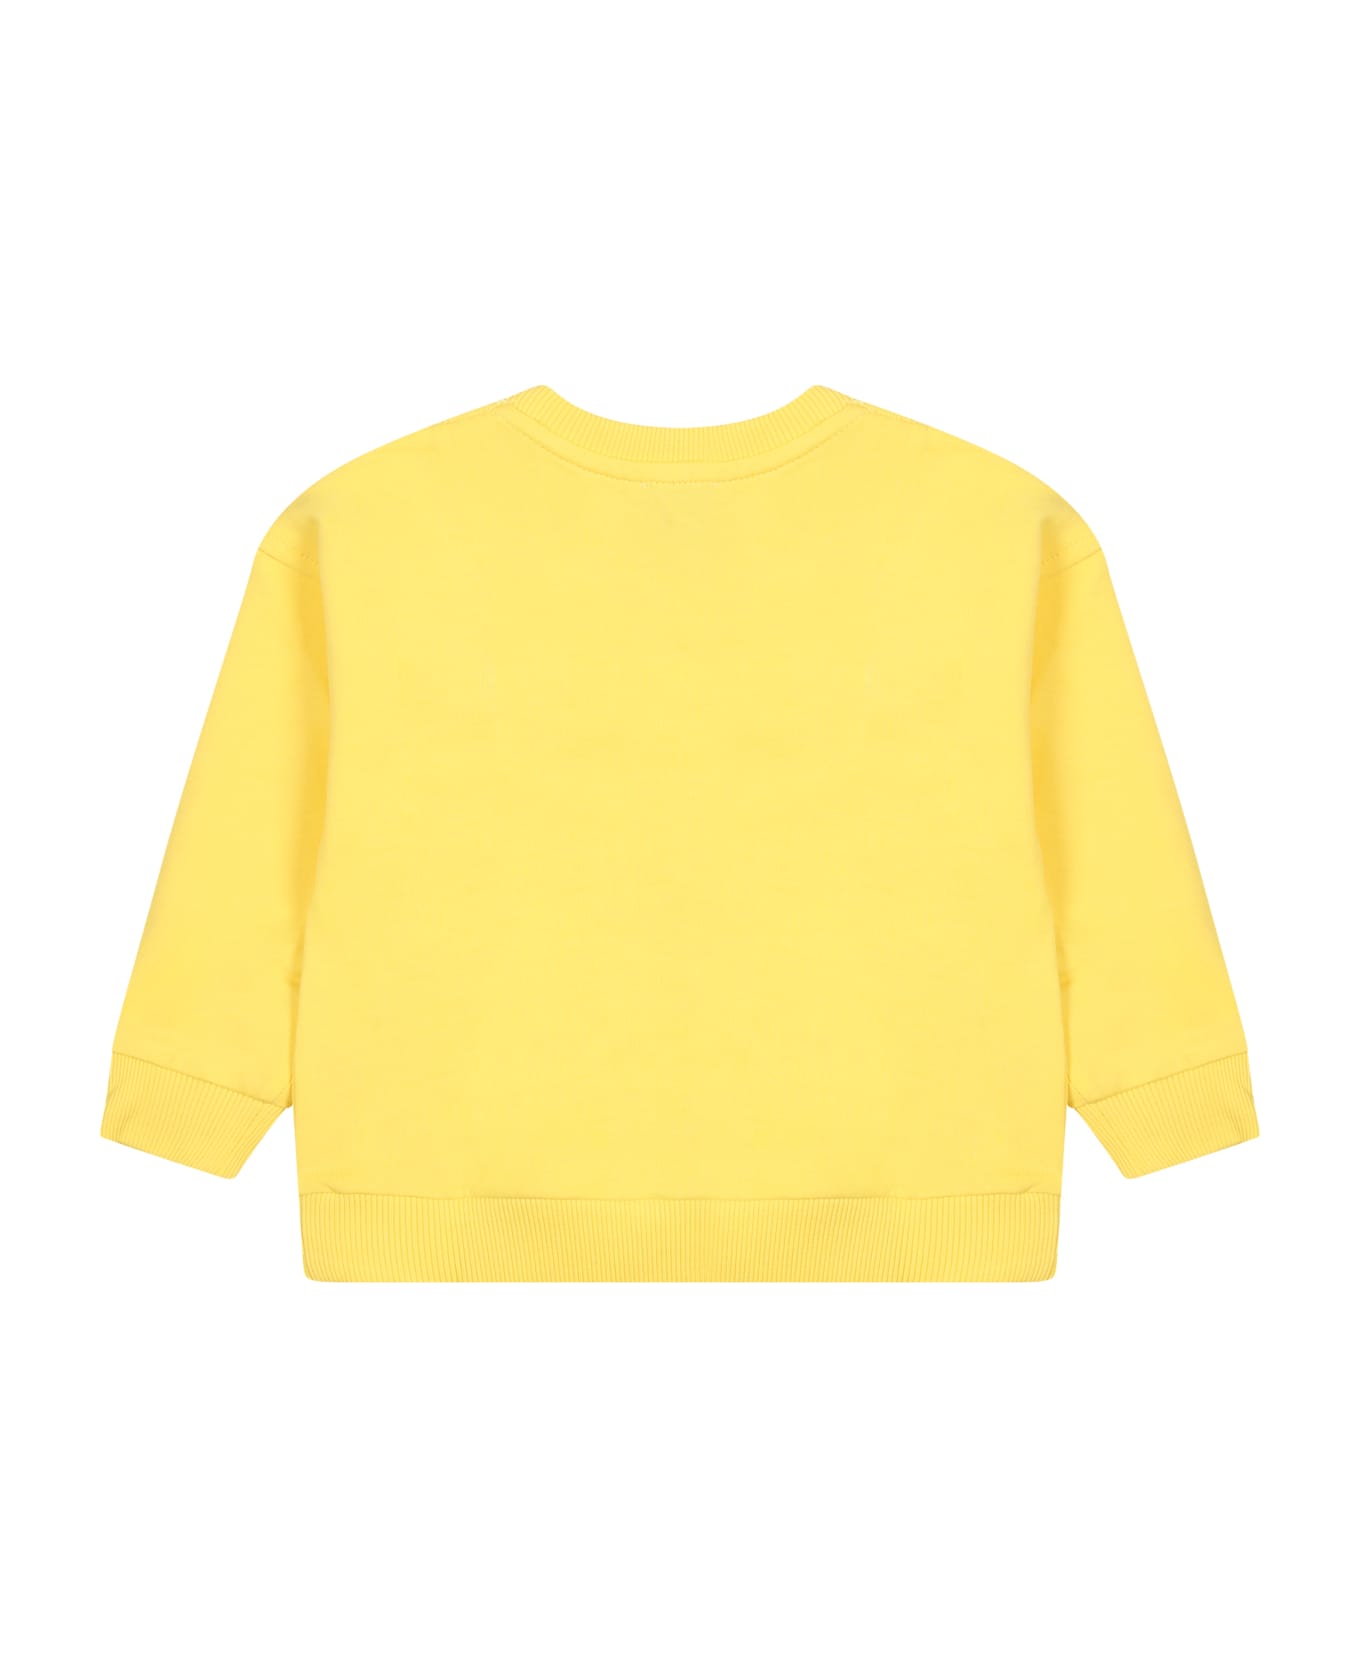 Moschino Yellow Sweatshirt For Babies With Teddy Bear - Yellow